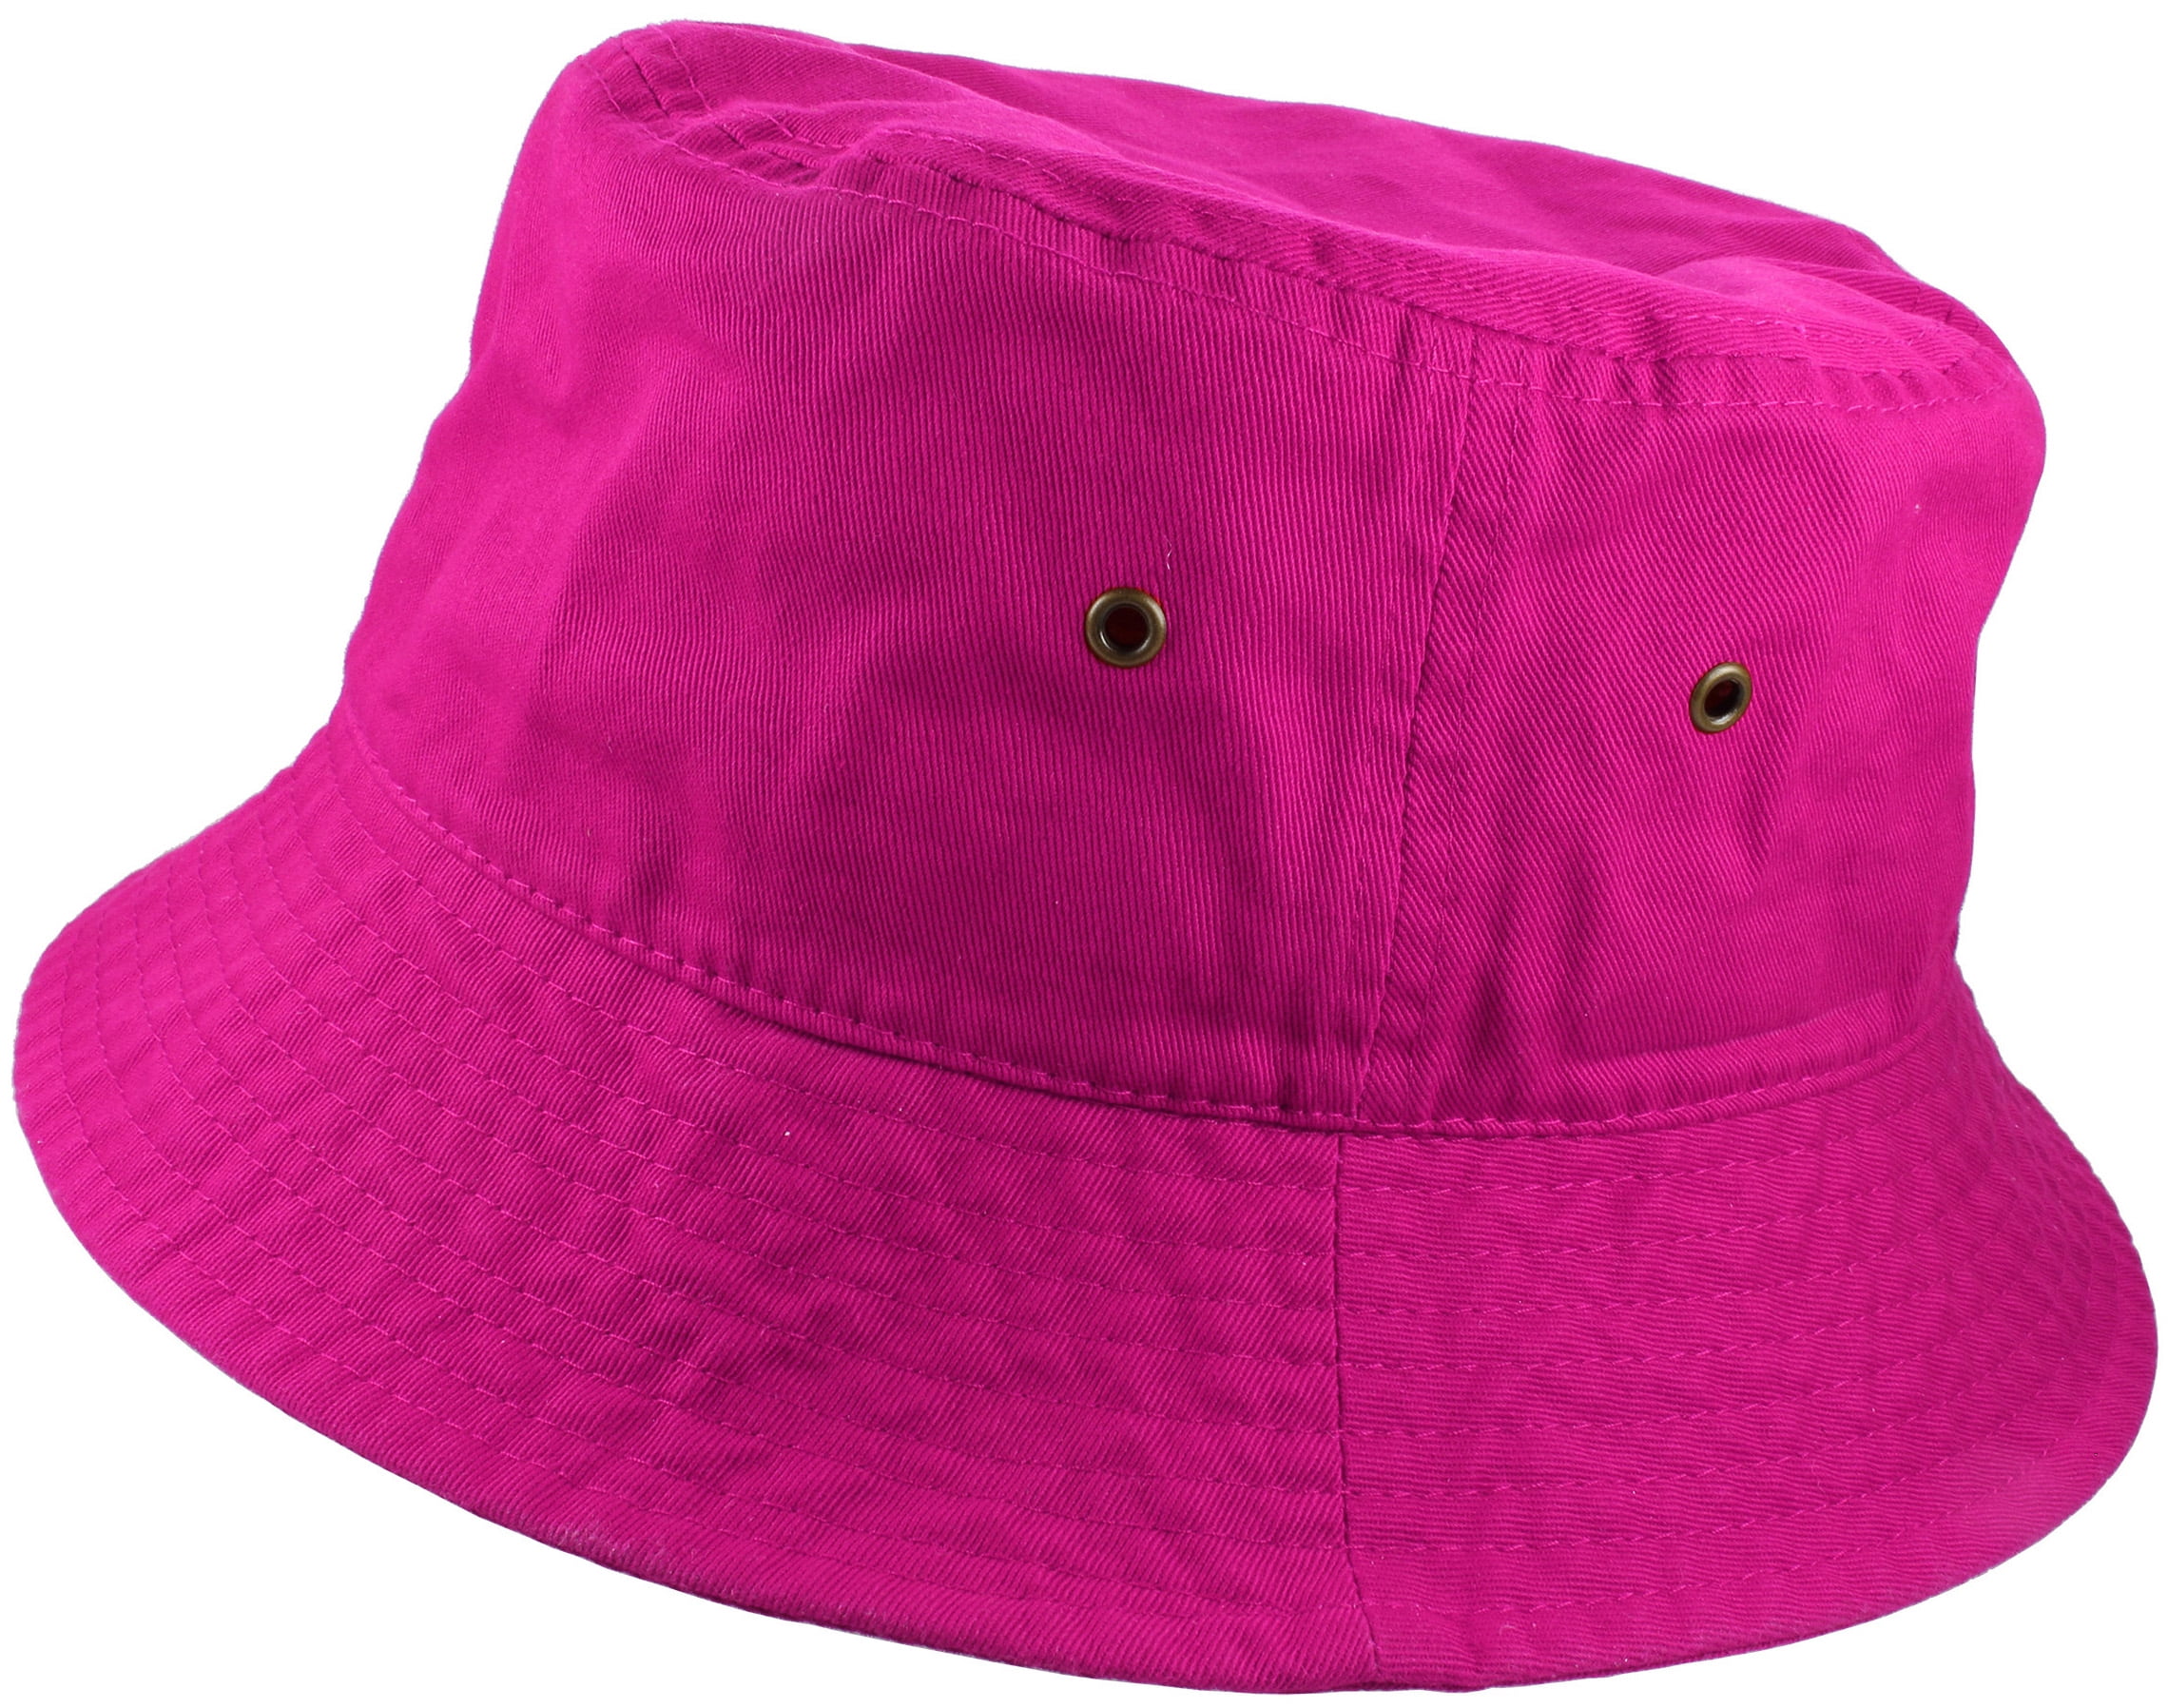 Gelante Bucket Hat 100% Cotton Packable Summer Travel Cap. Neon Pink-S/M 